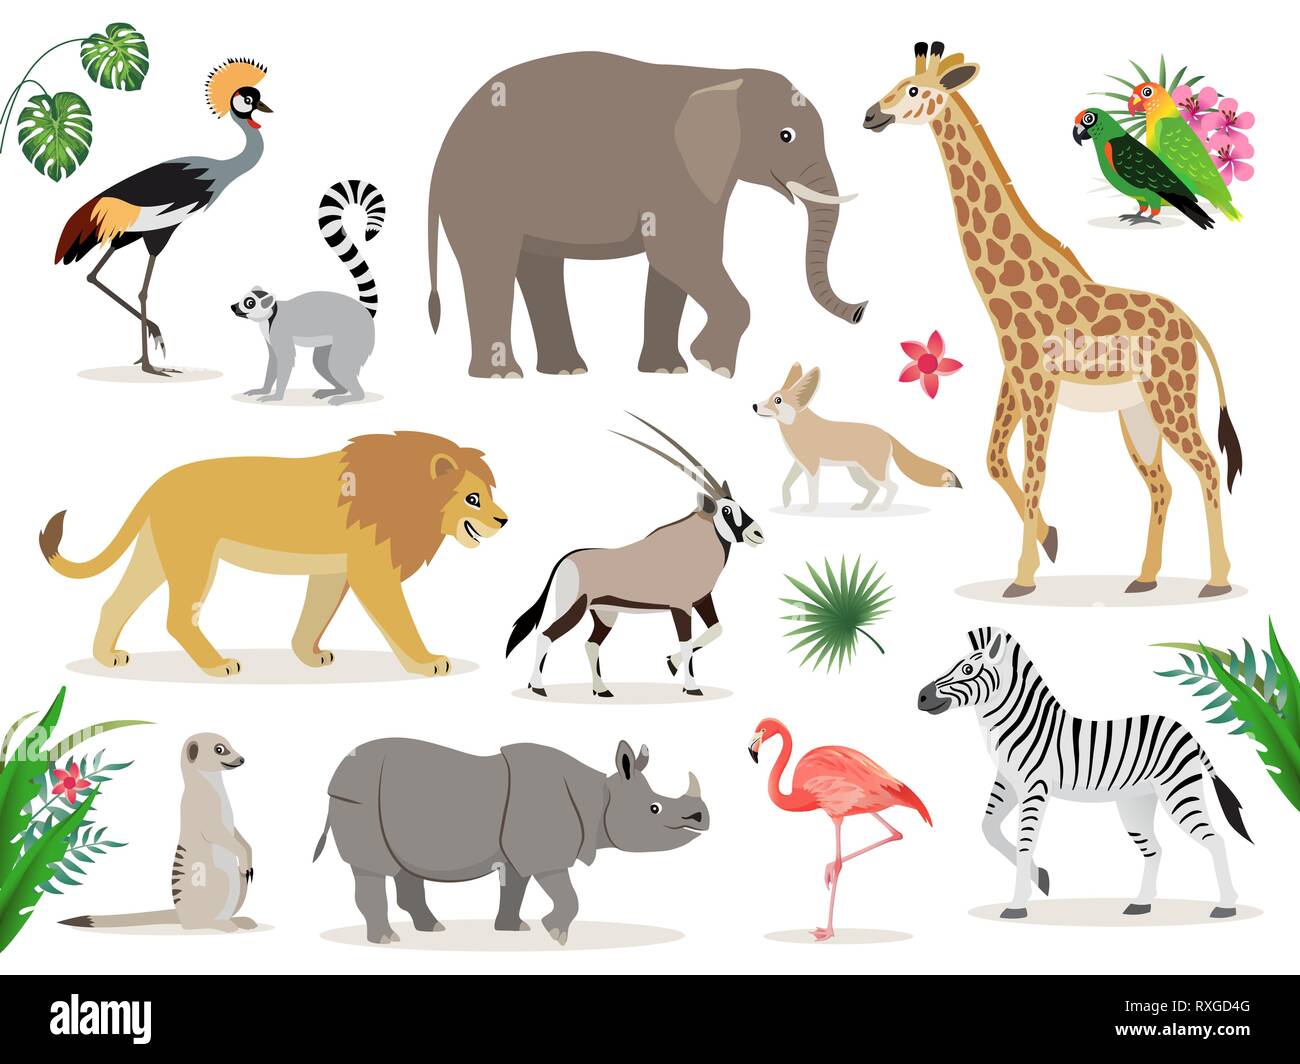 Set of cute African animals icons isolated on white background, crowned crane, lemur, elephant, giraffe, lion, antelope, zebra, suricate, rhinoceros Stock Vector